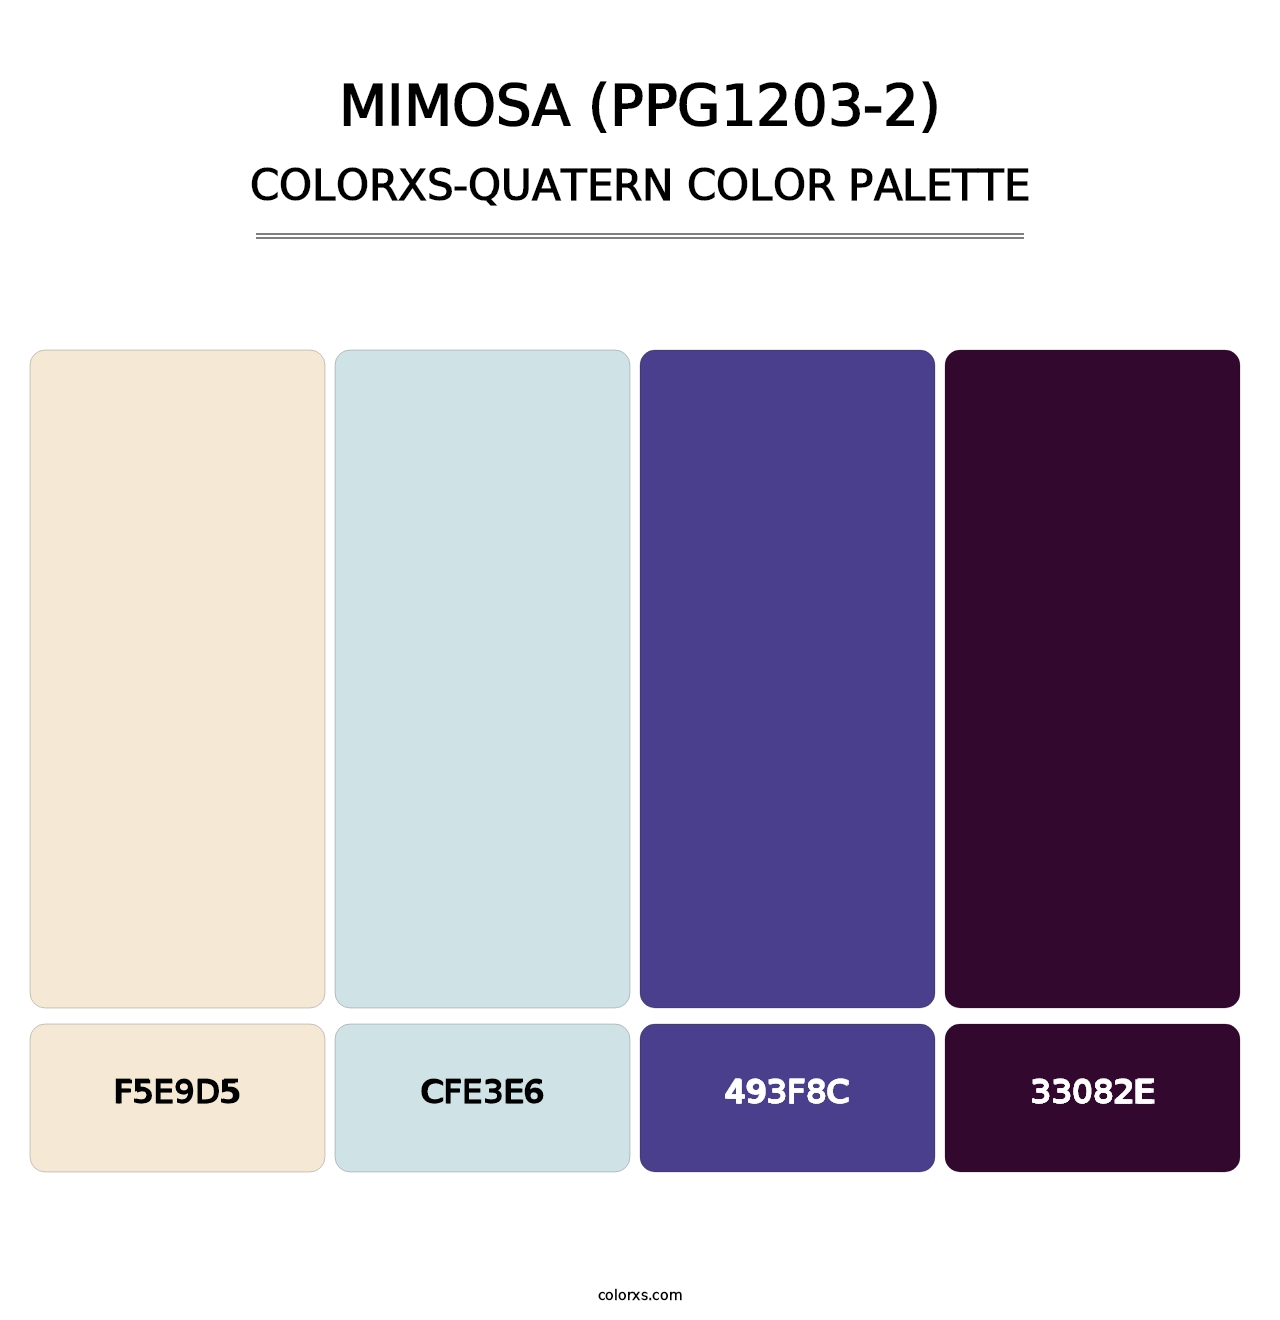 Mimosa (PPG1203-2) - Colorxs Quatern Palette